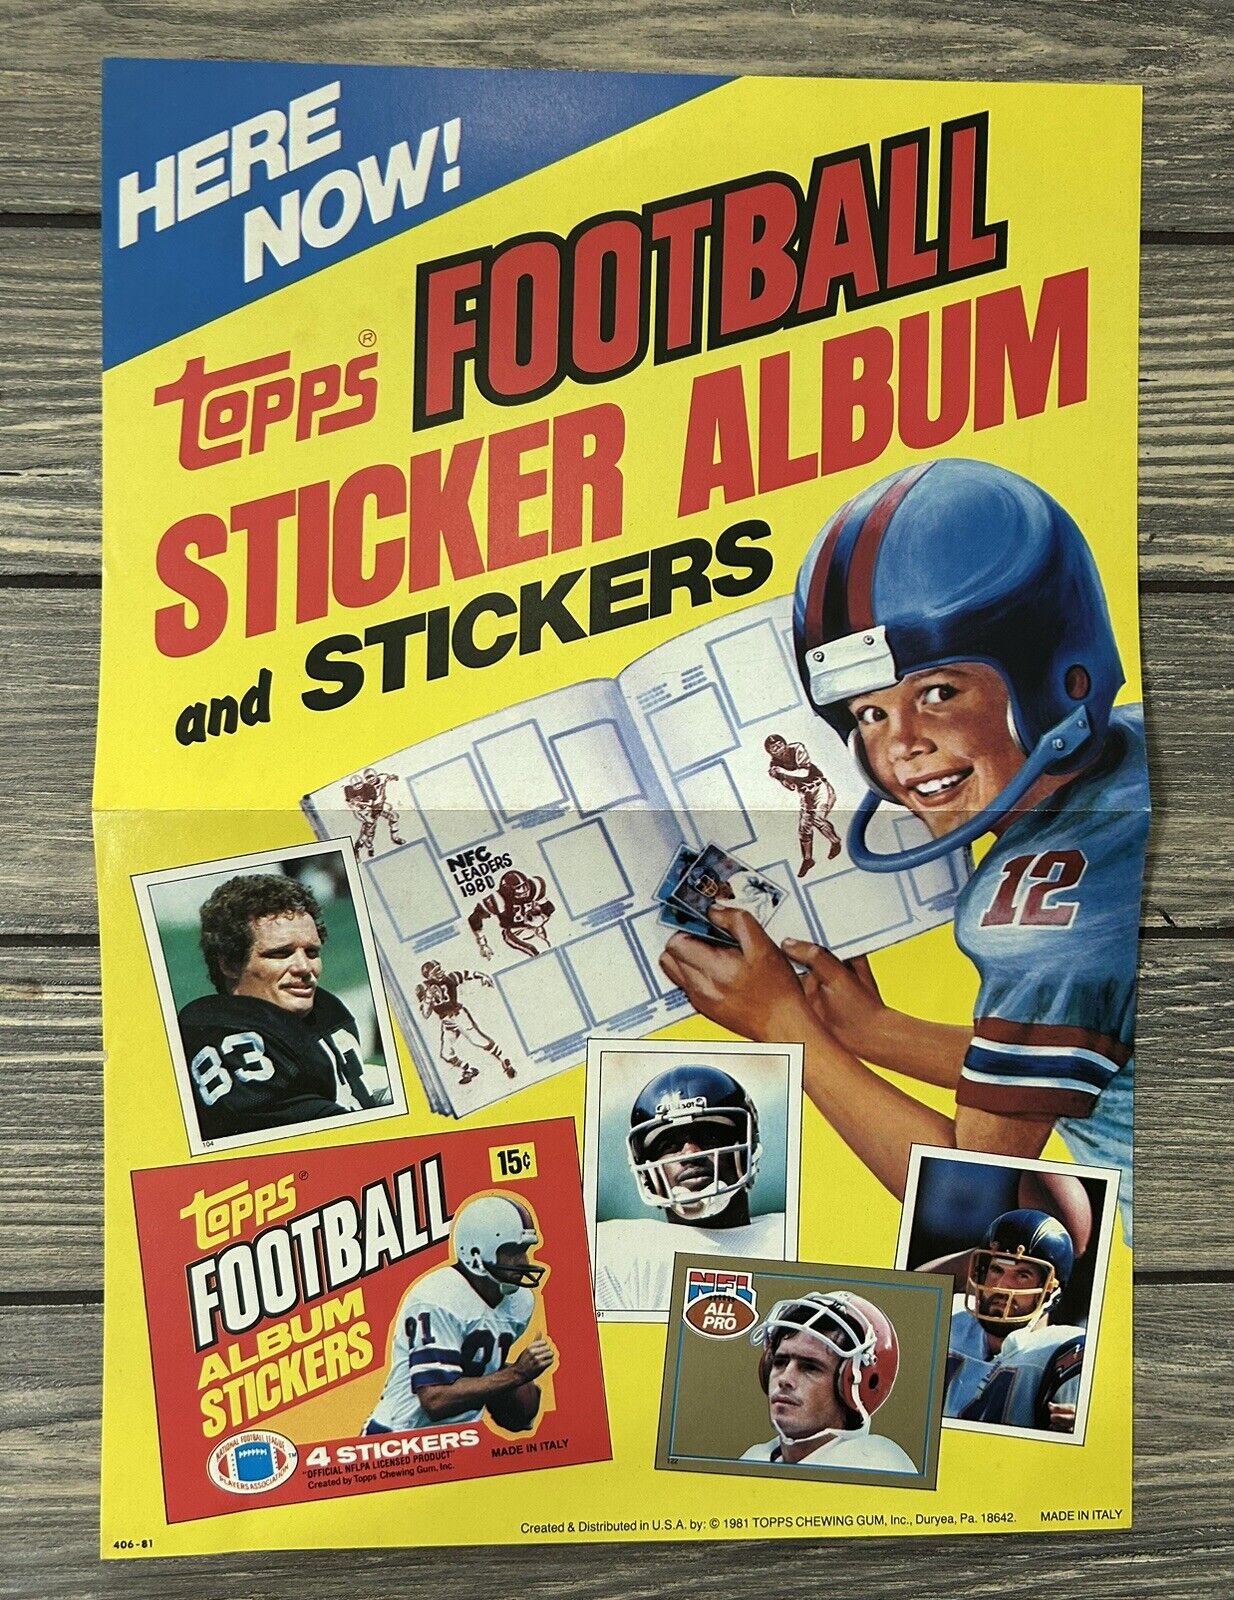 Vintage Topps Football Sticker Album Poster Ad 9.25” X 13 3/8”